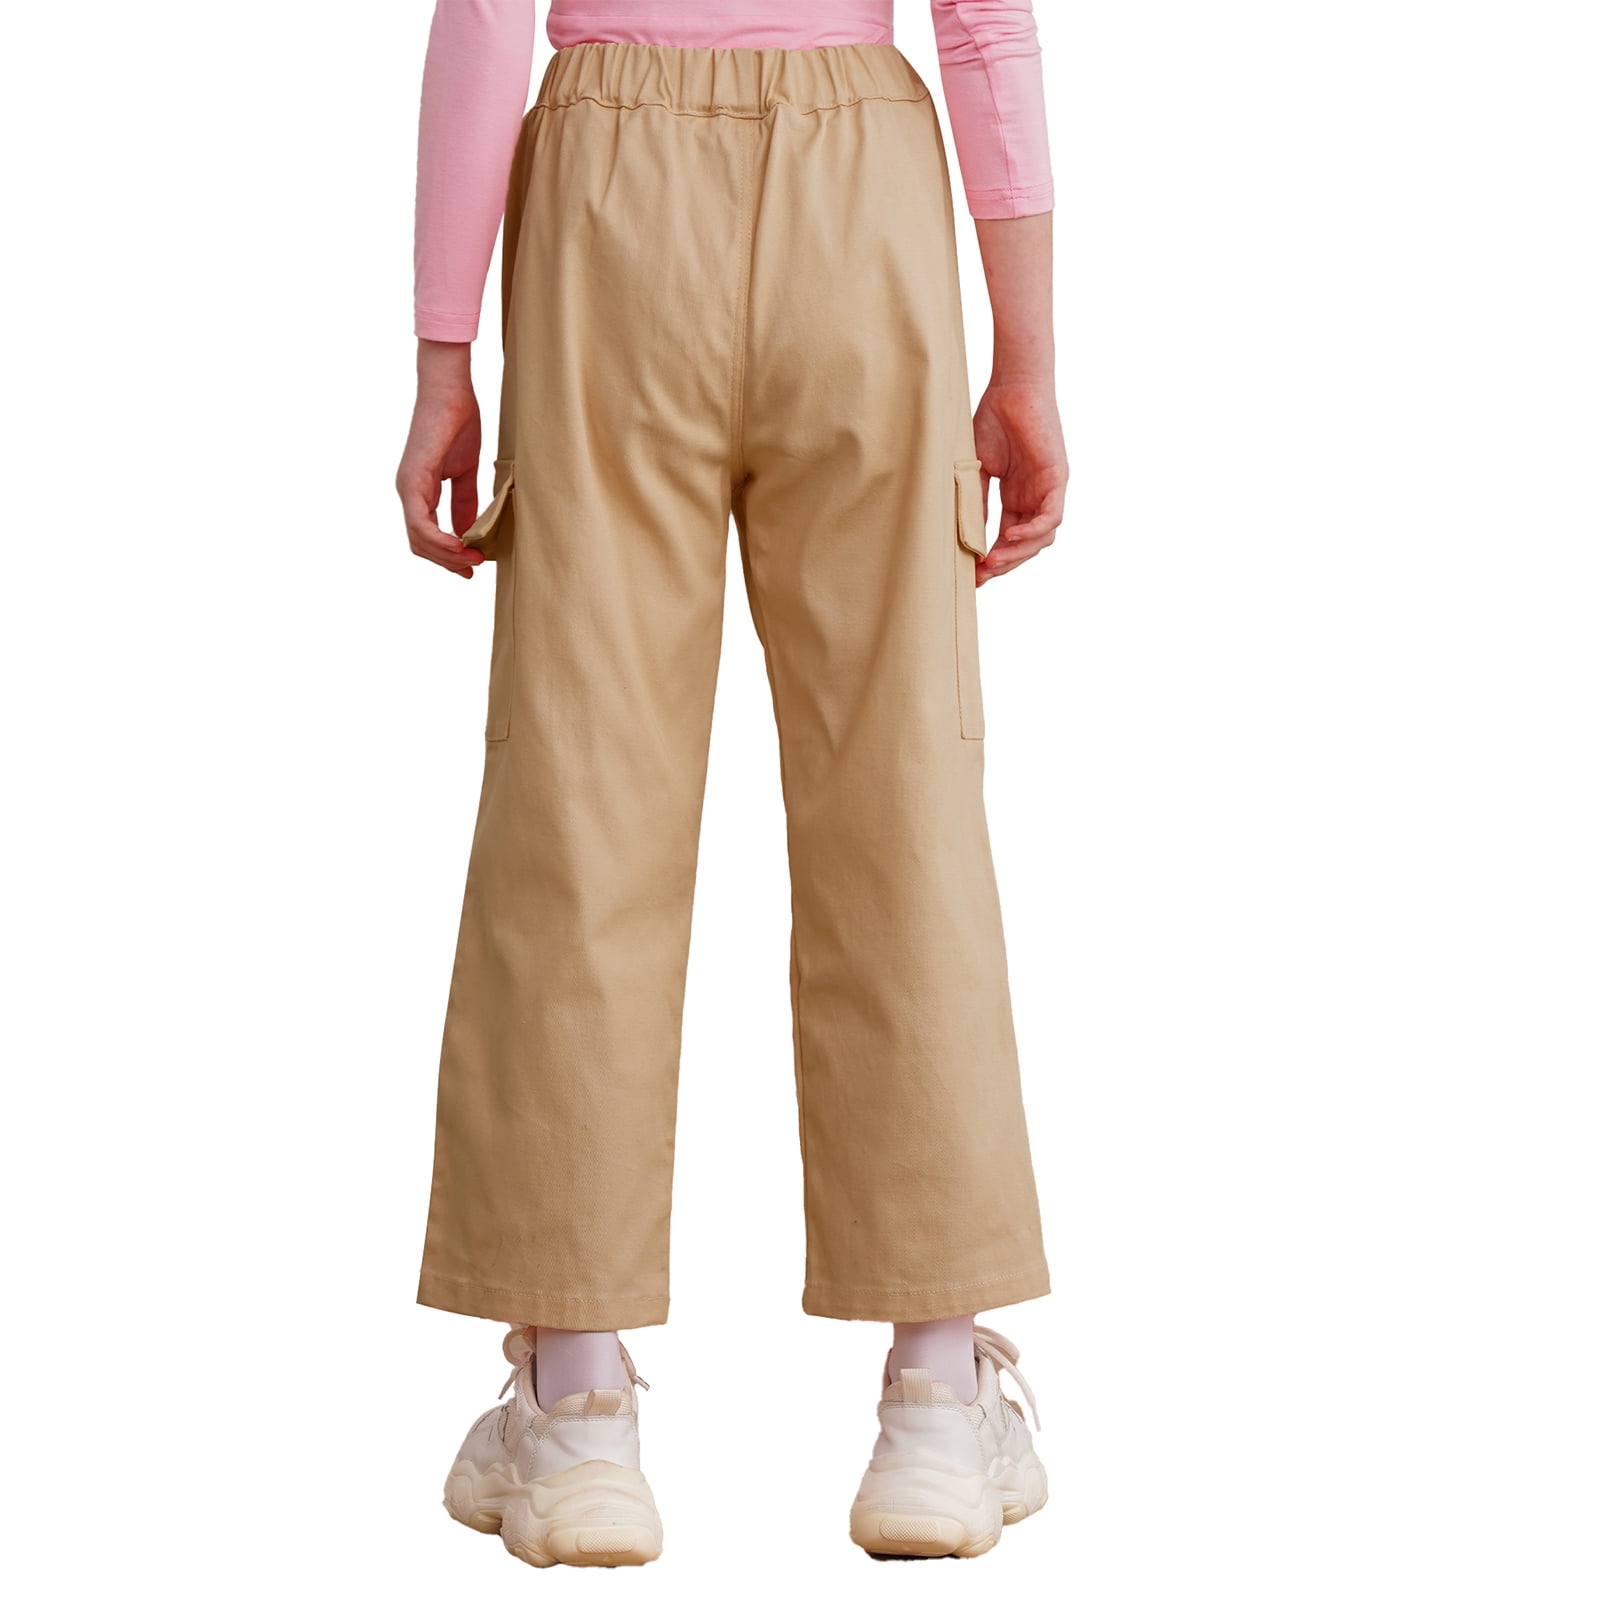 IEFIEL Girls Casual Jogger Cargo Pants Big Pockets Hip Hop Dance Pants  Hiking Climbing Sweatpants,Sizes 6-16 Brown 12